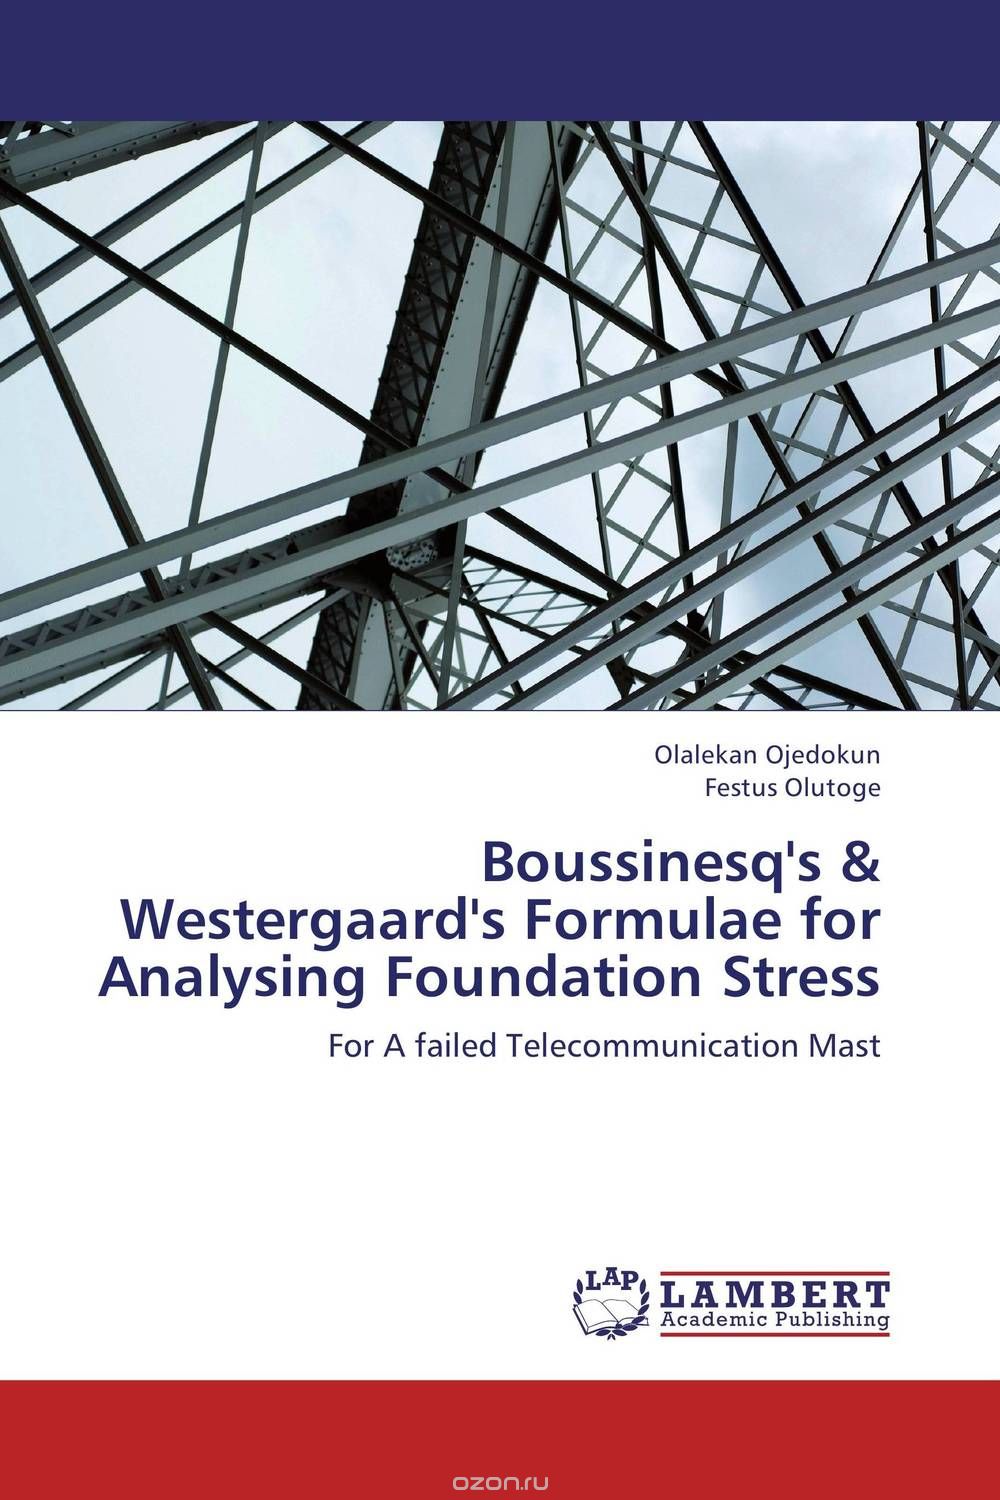 Скачать книгу "Boussinesq's & Westergaard's Formulae for Analysing Foundation Stress"